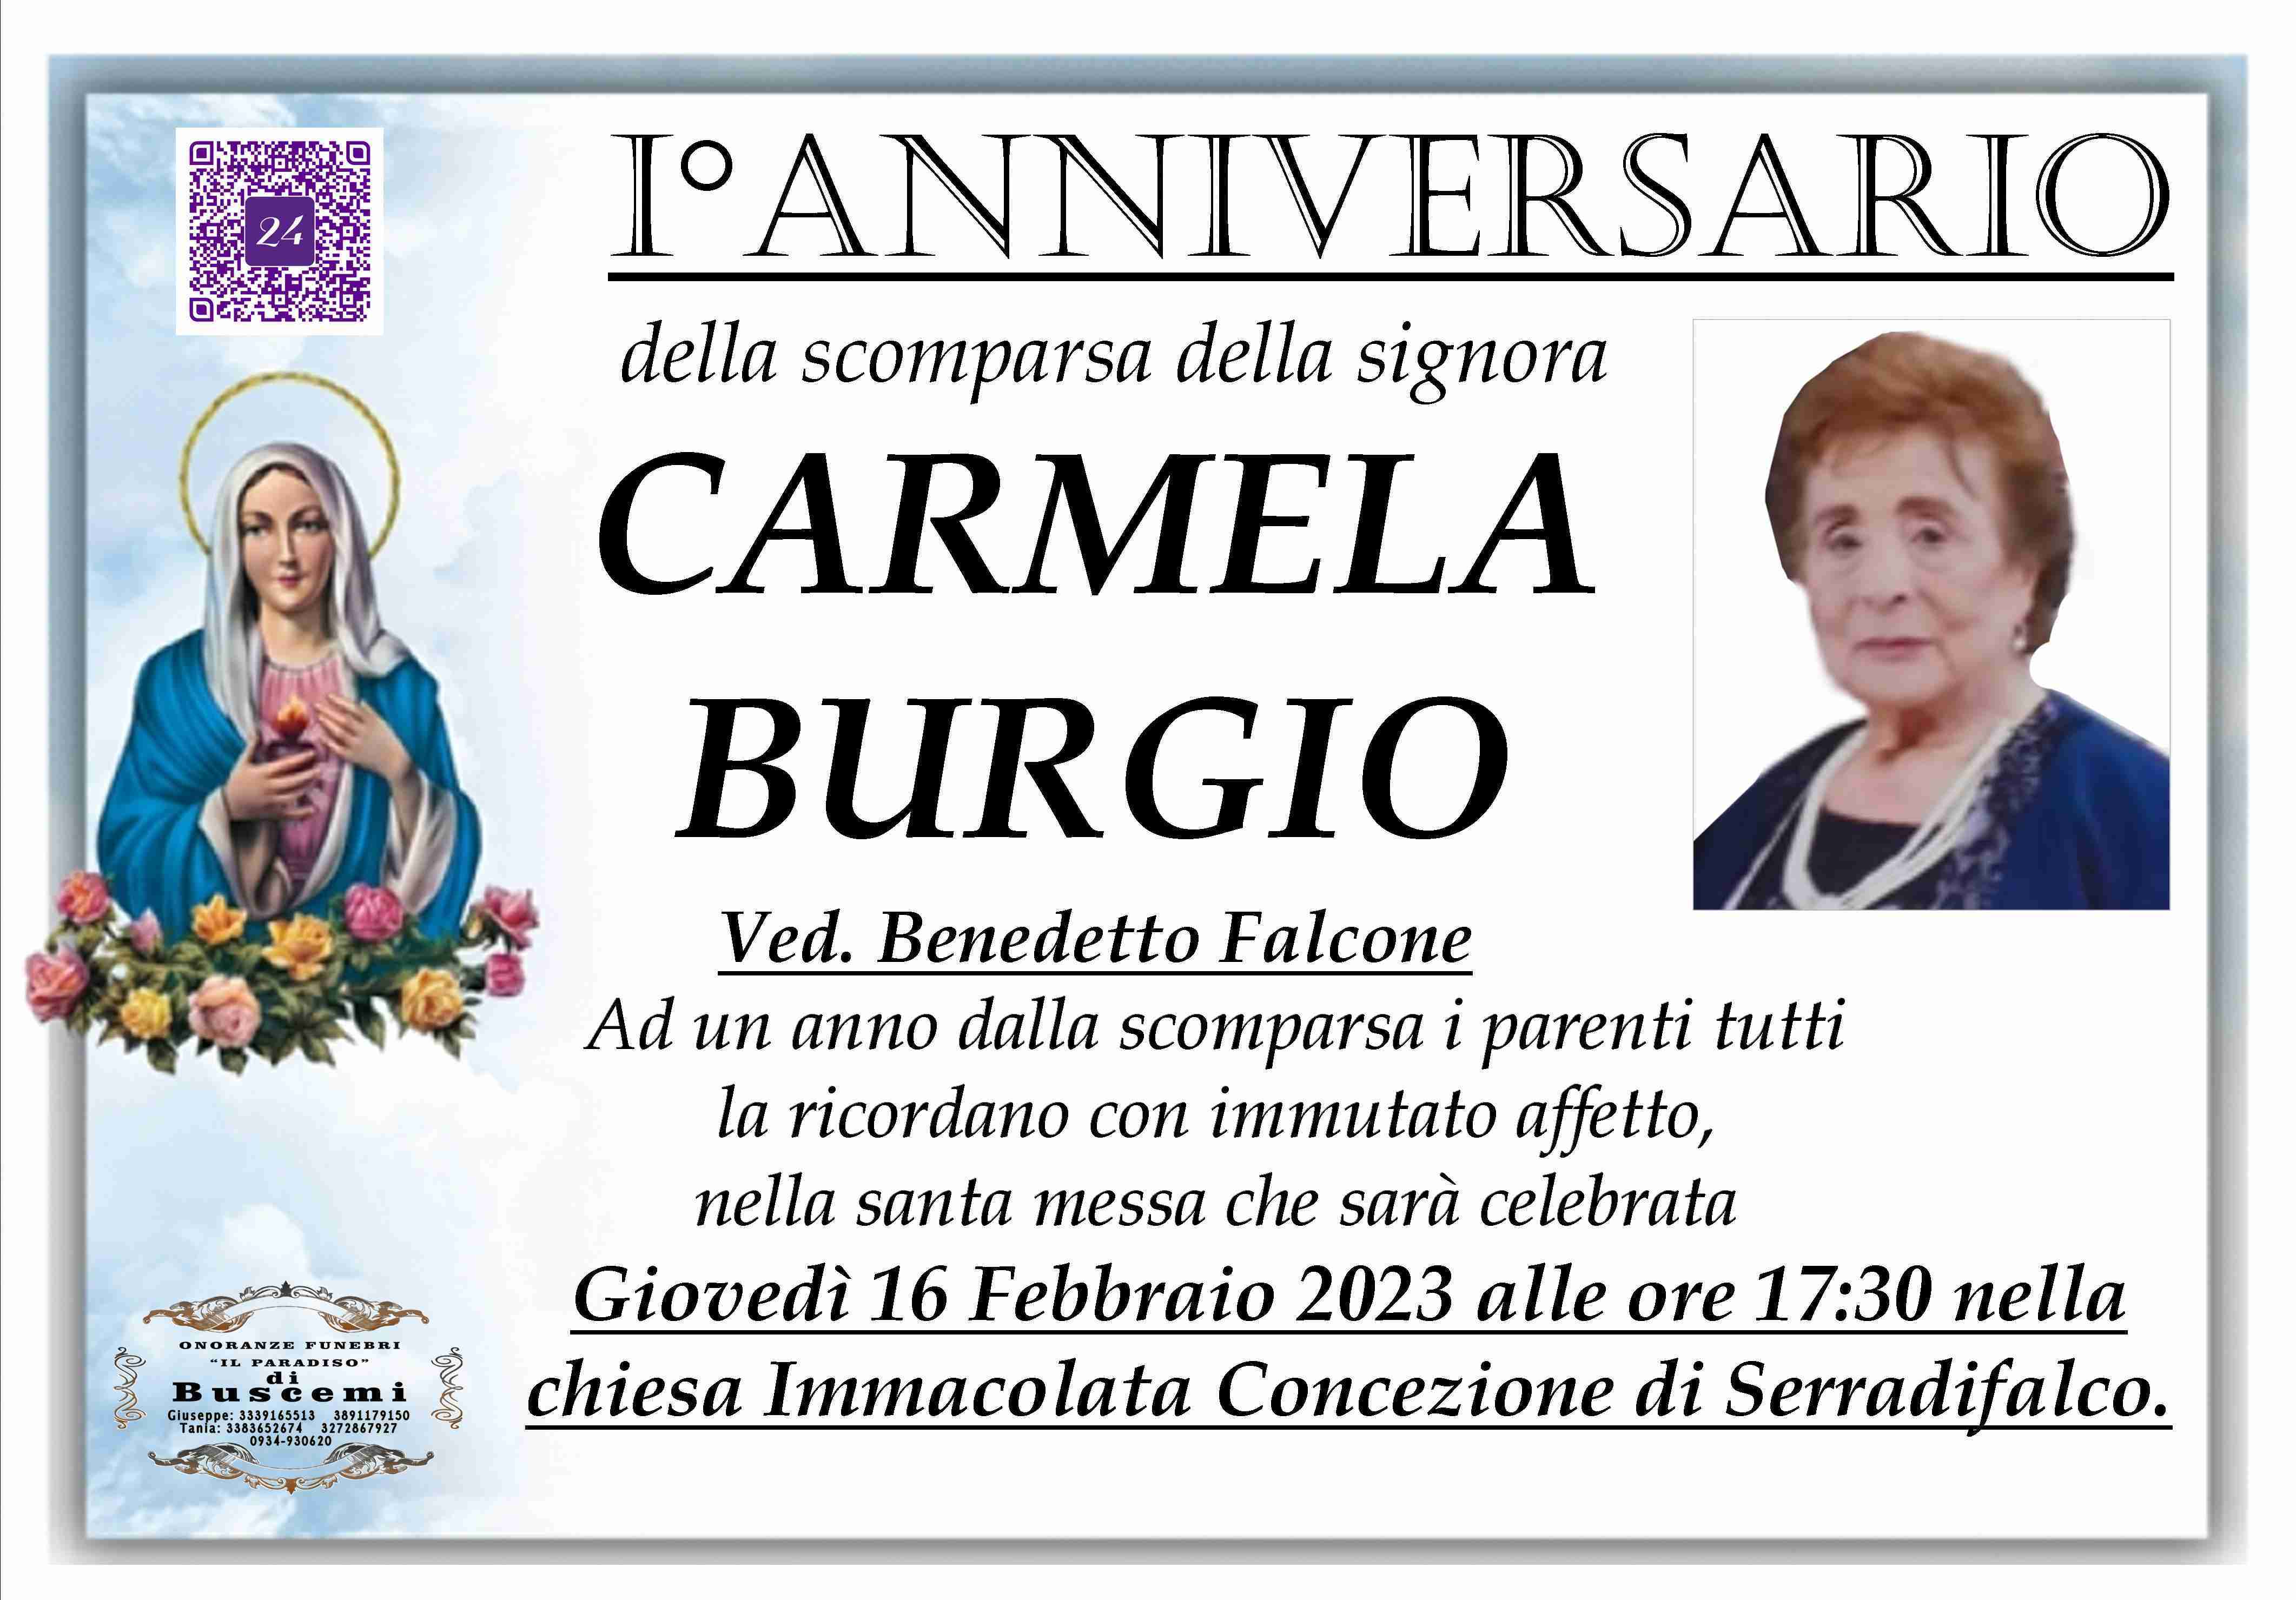 Carmela Burgio